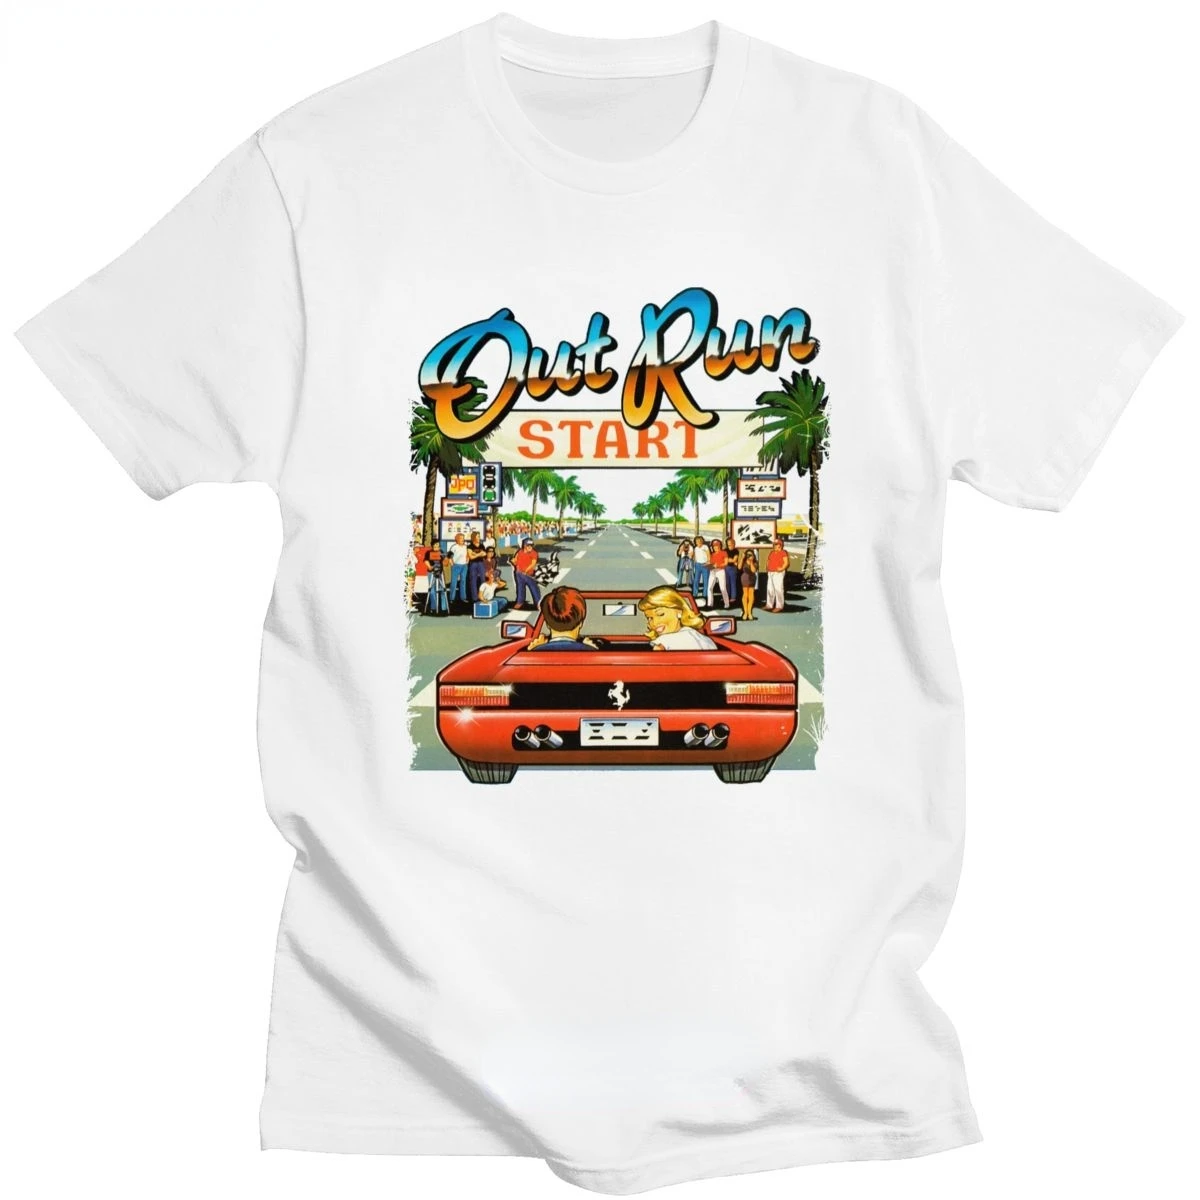 اليابان Arcade Racing Video Game Out Run T Shirt Men Vintage 80s Console Gaming Tops Outrun Tshirt Tee